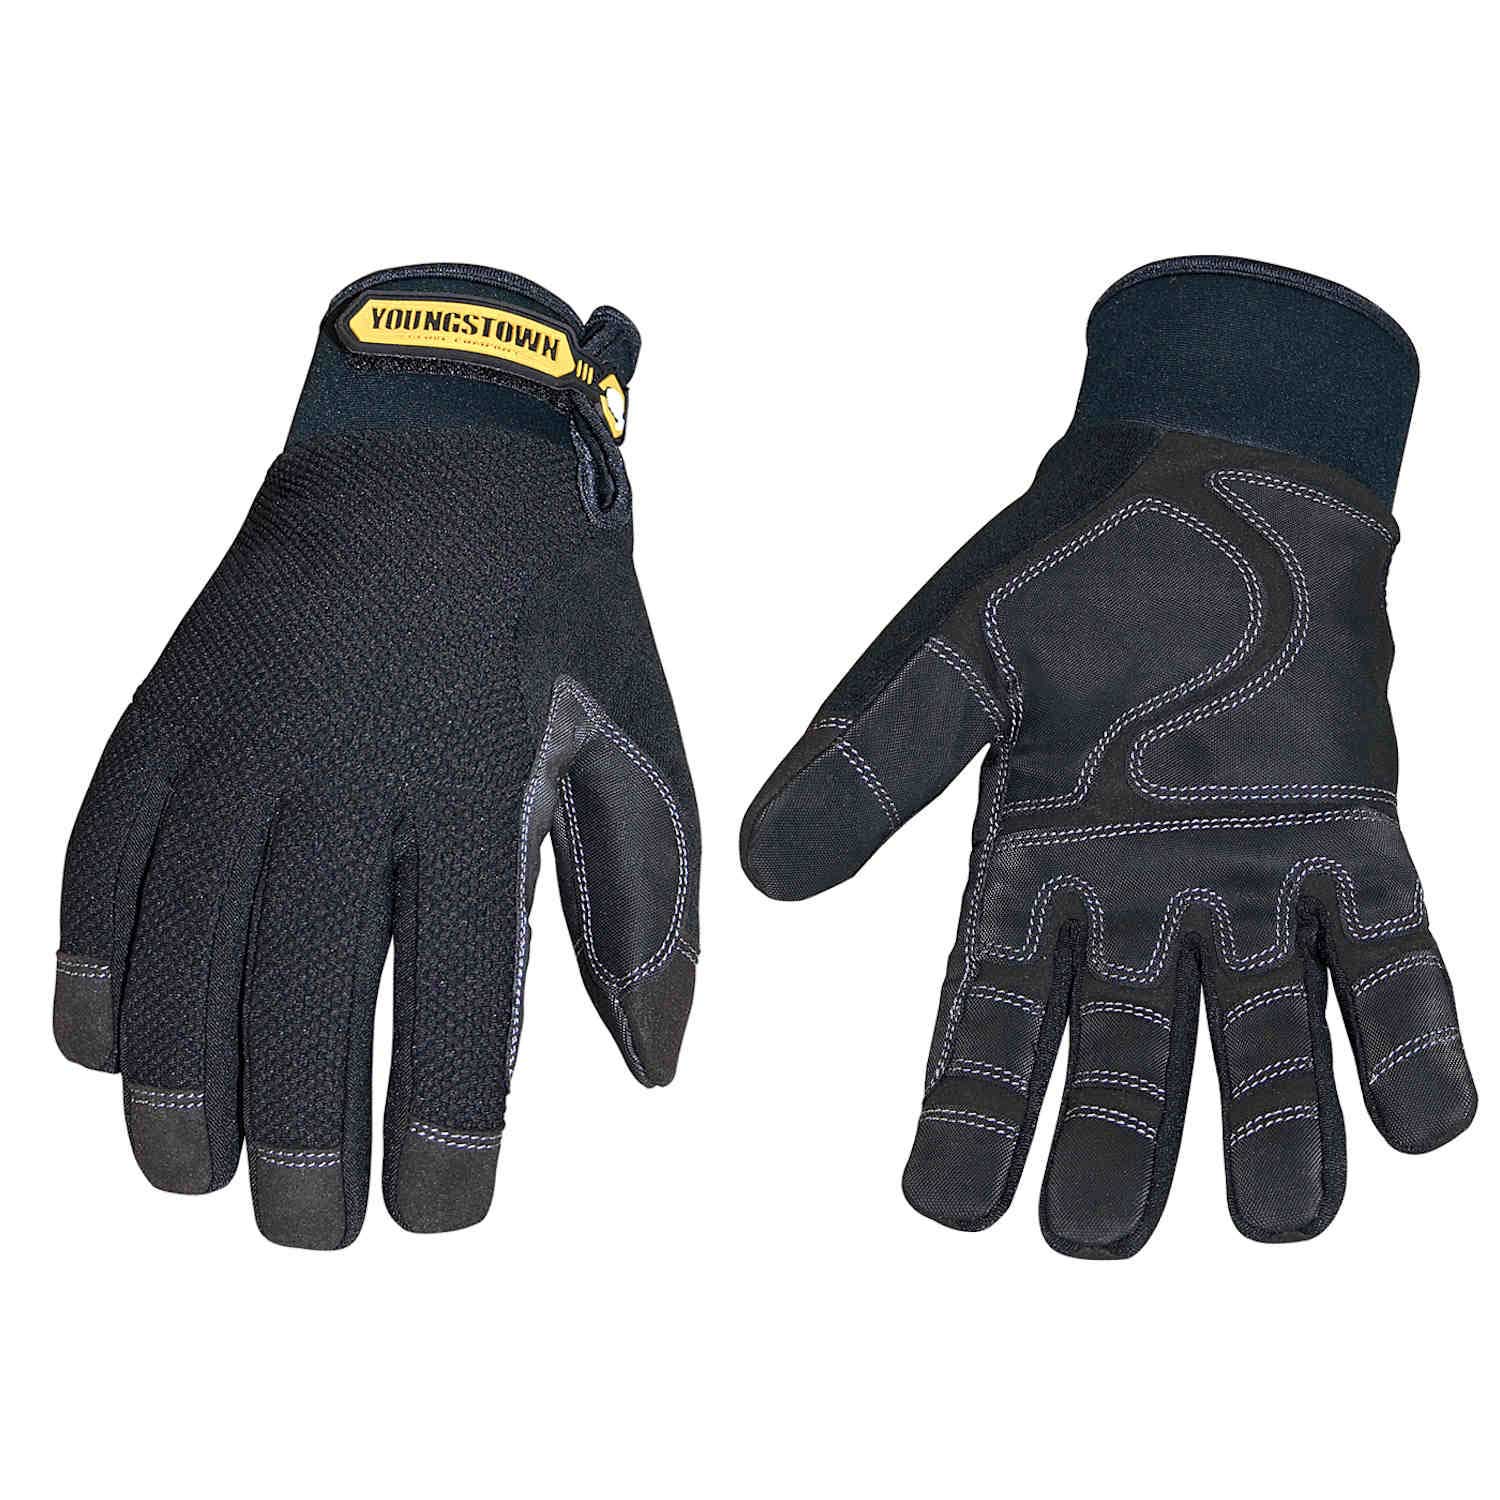 Youngstown Glove Waterproof Winter Plus Glove